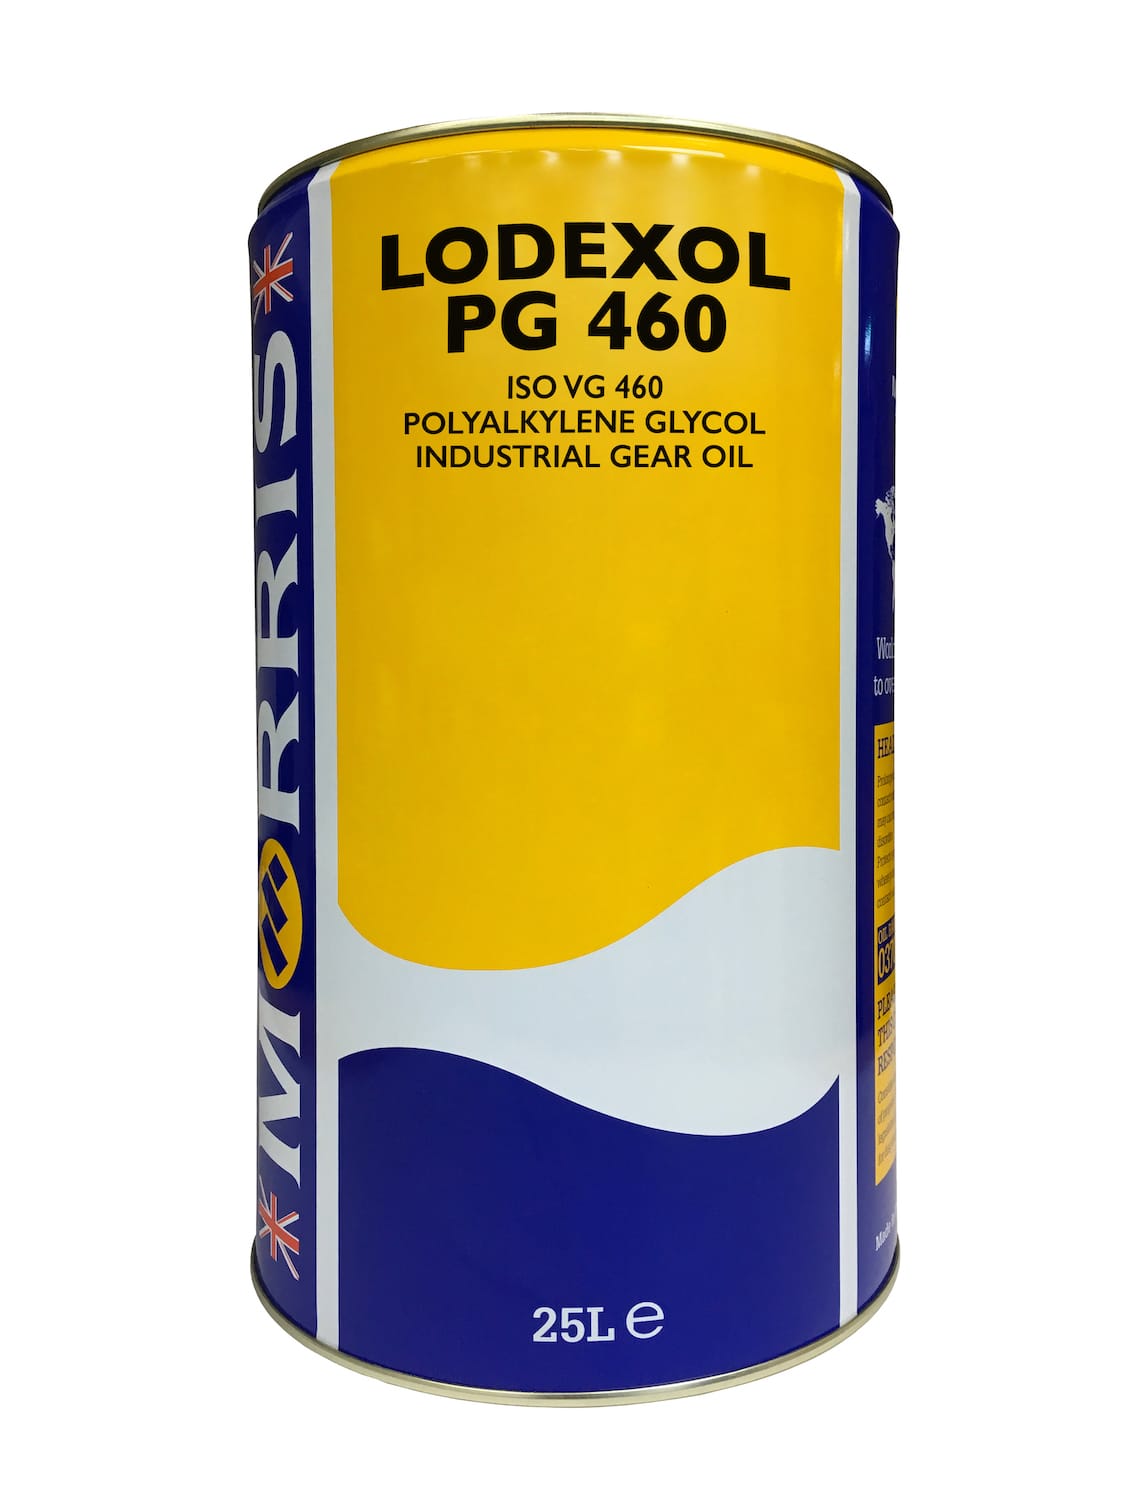 Lodexol PG 460